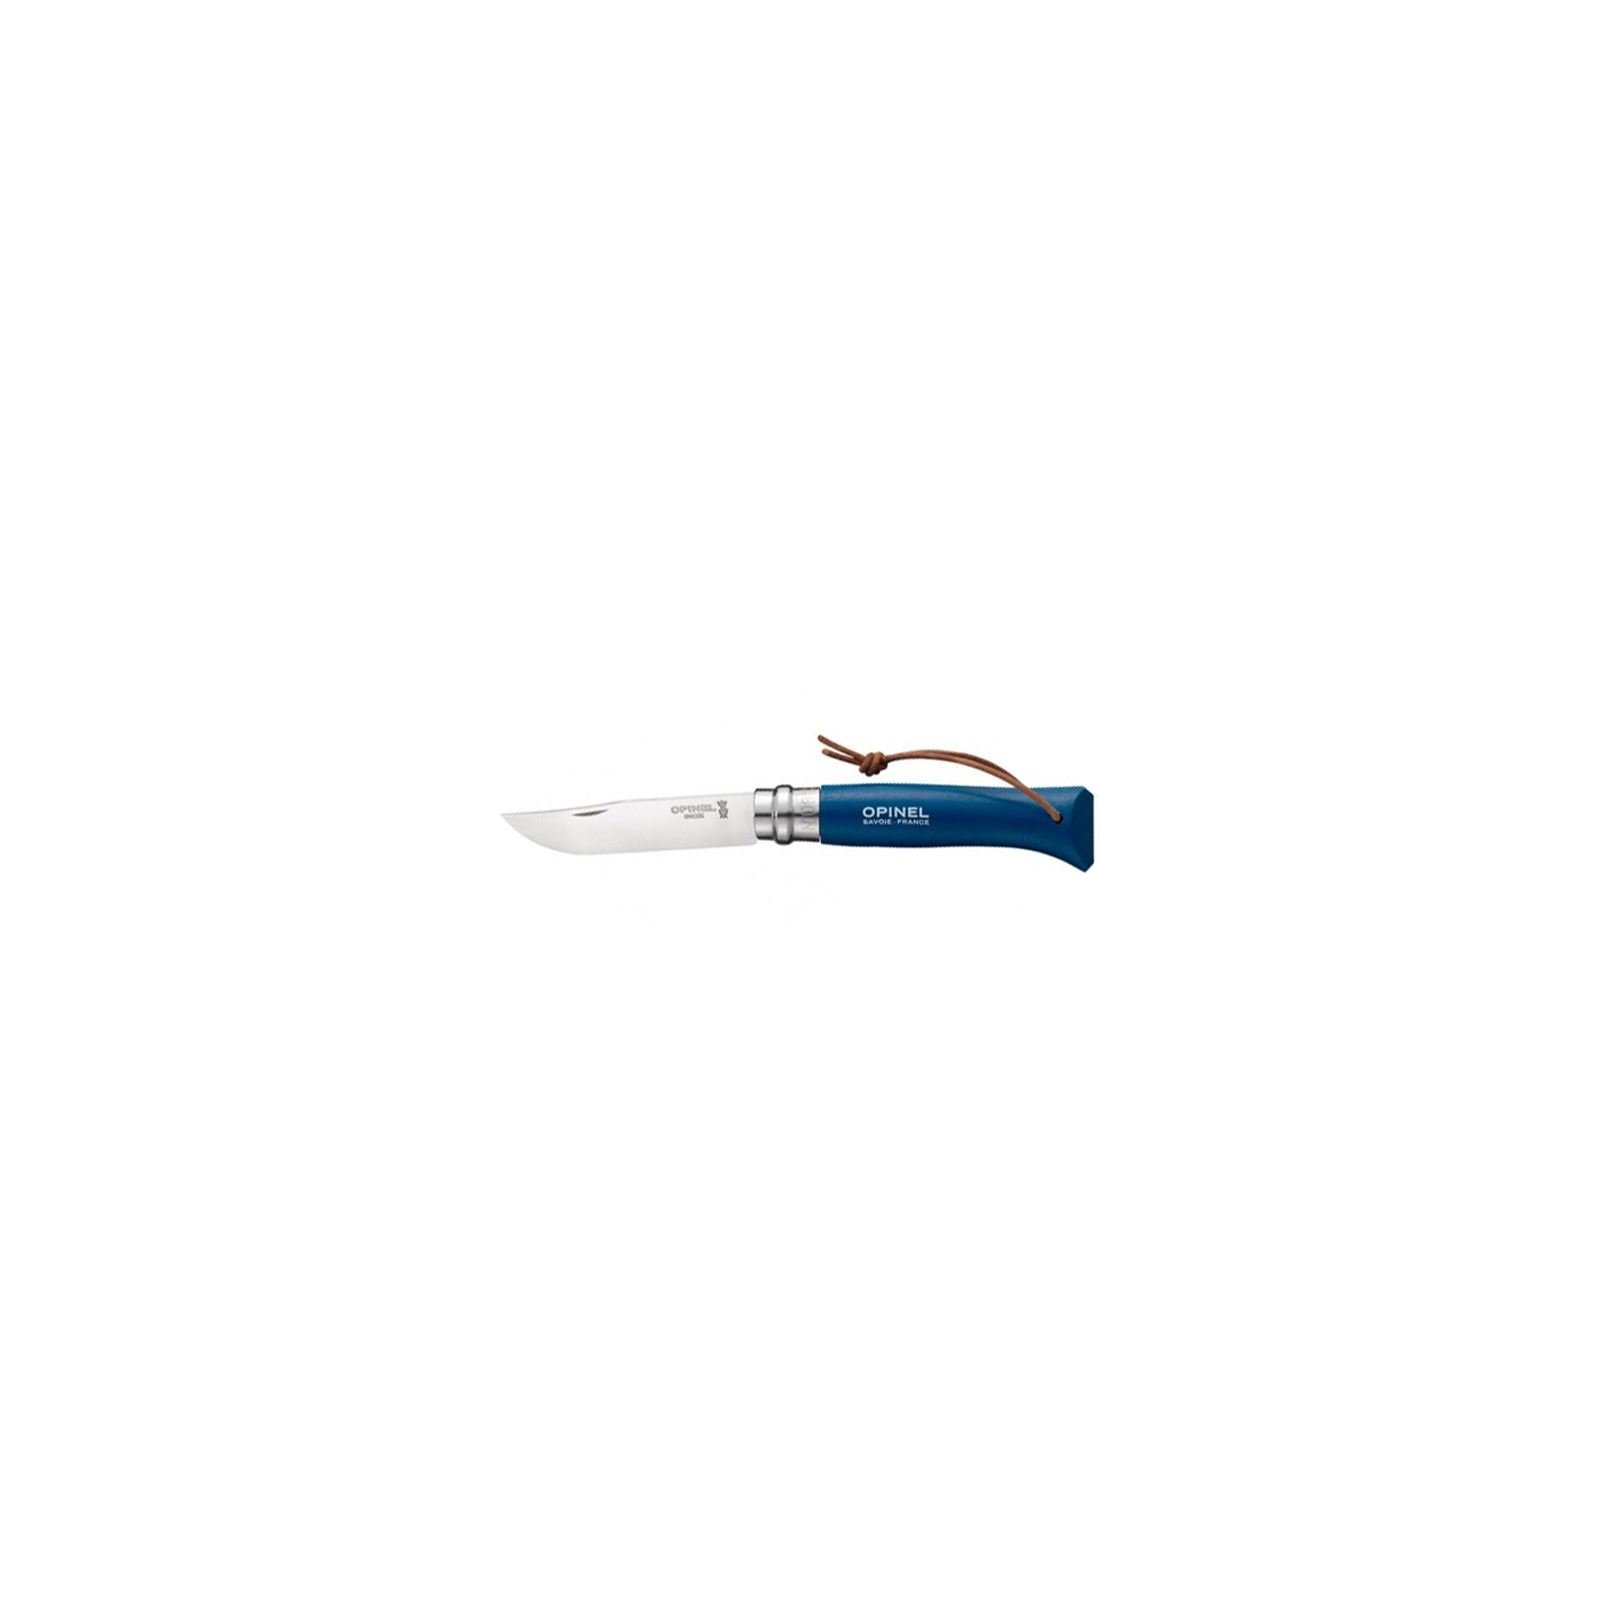 Нож Opinel №8 Inox VRI Trekking зеленый, без упаковки (001703)